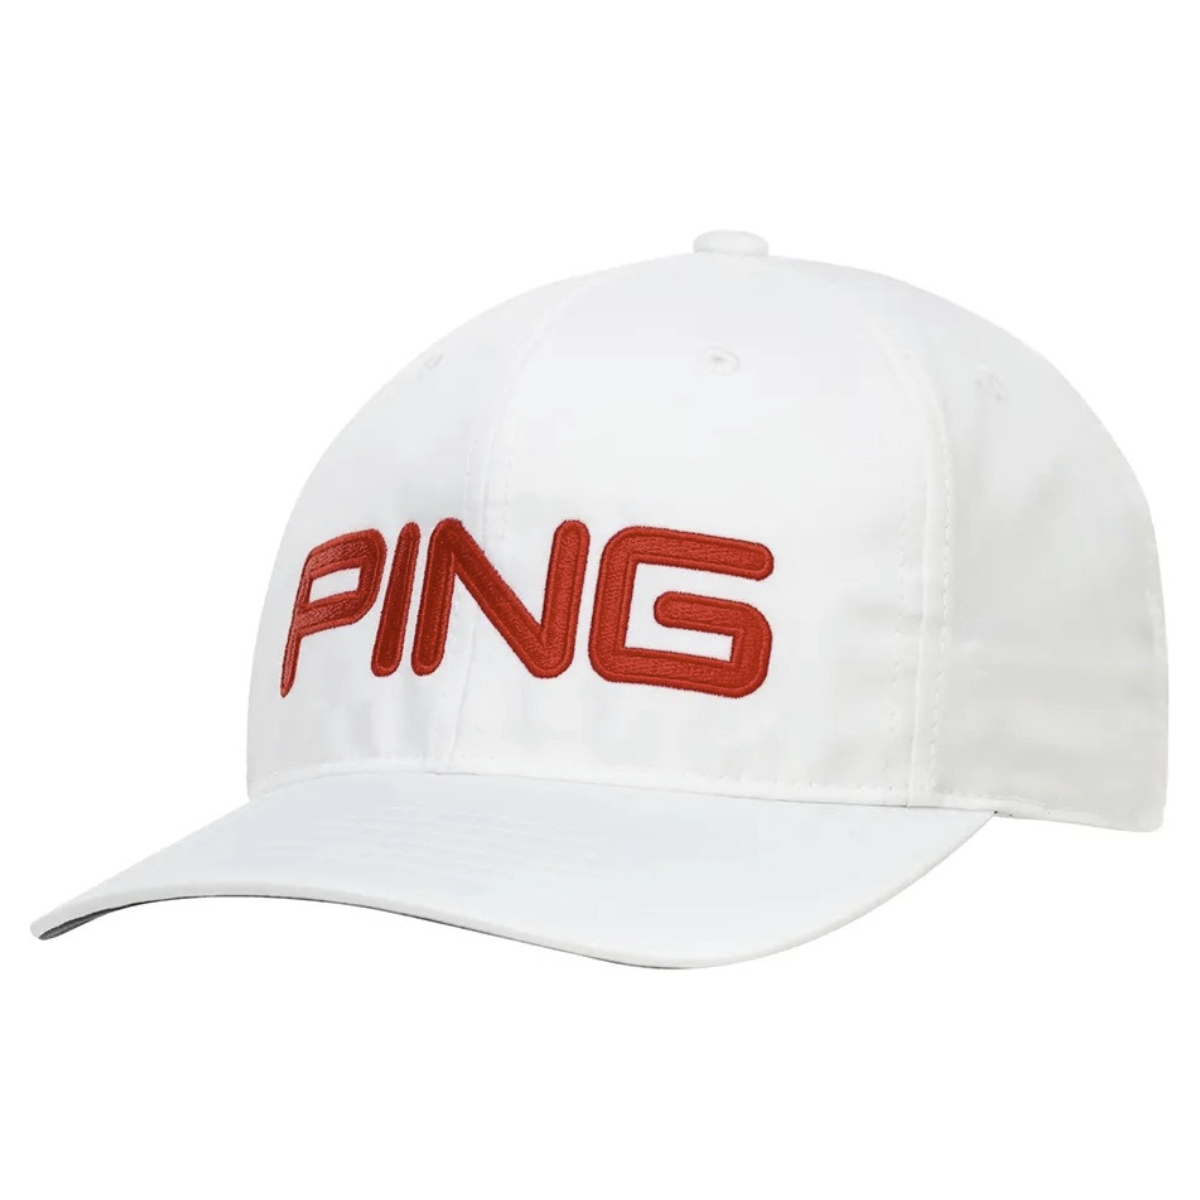 Ping Classic Lite Cap Weiss/Rot